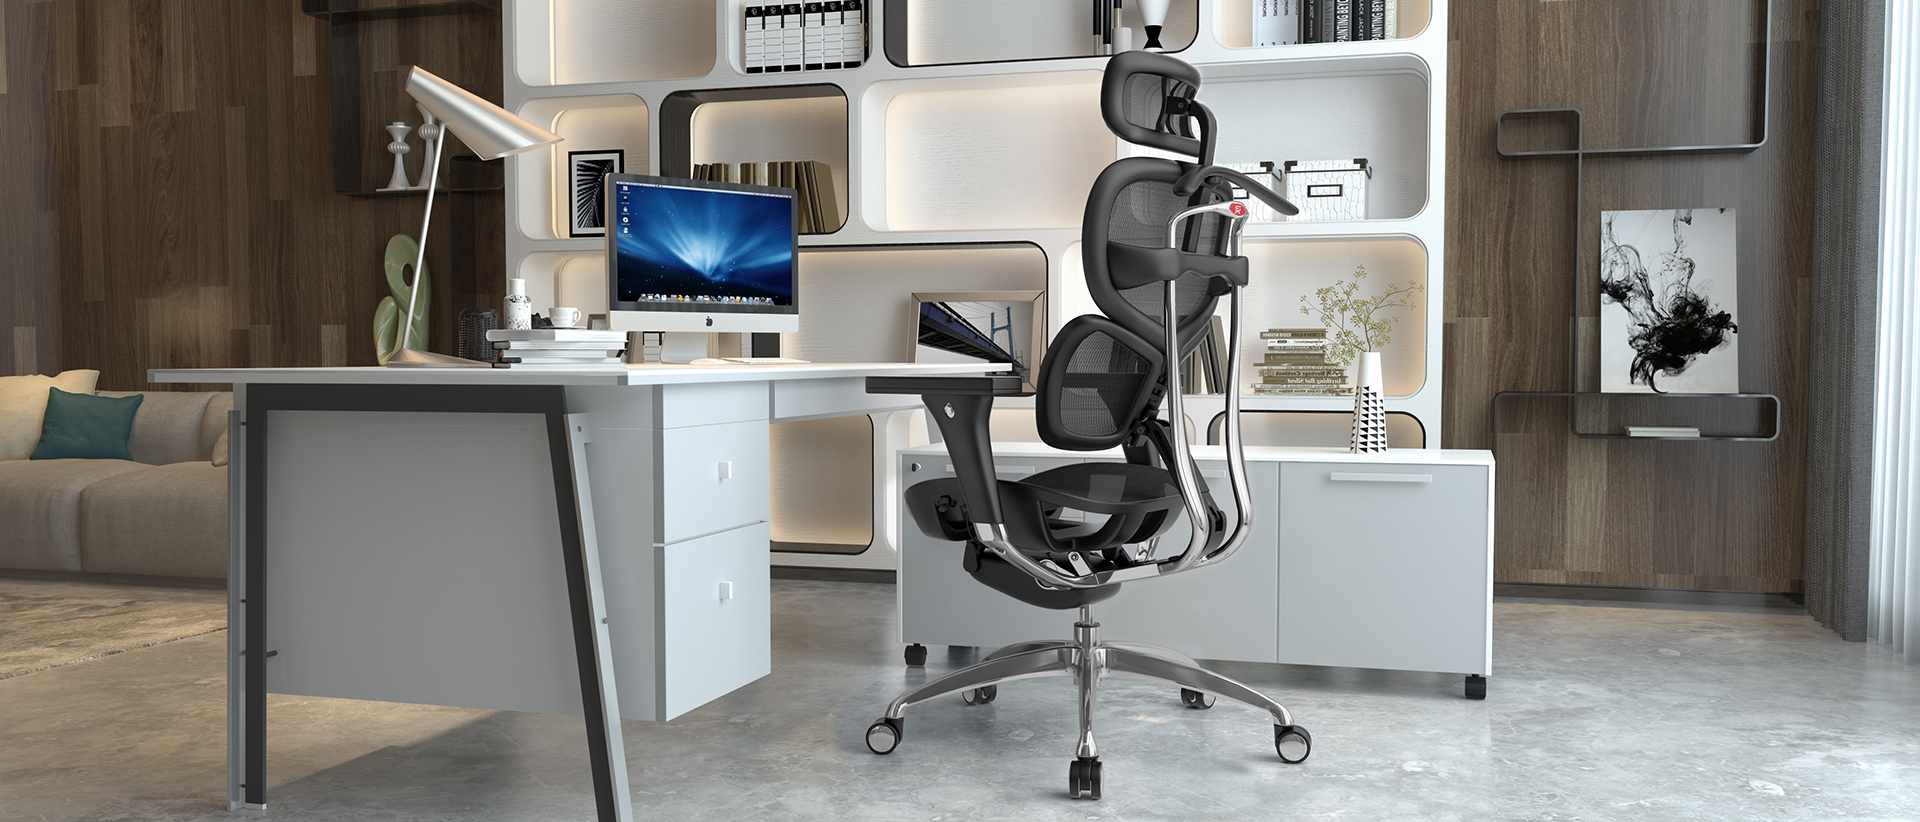 Sihoo Chair For Boss Room